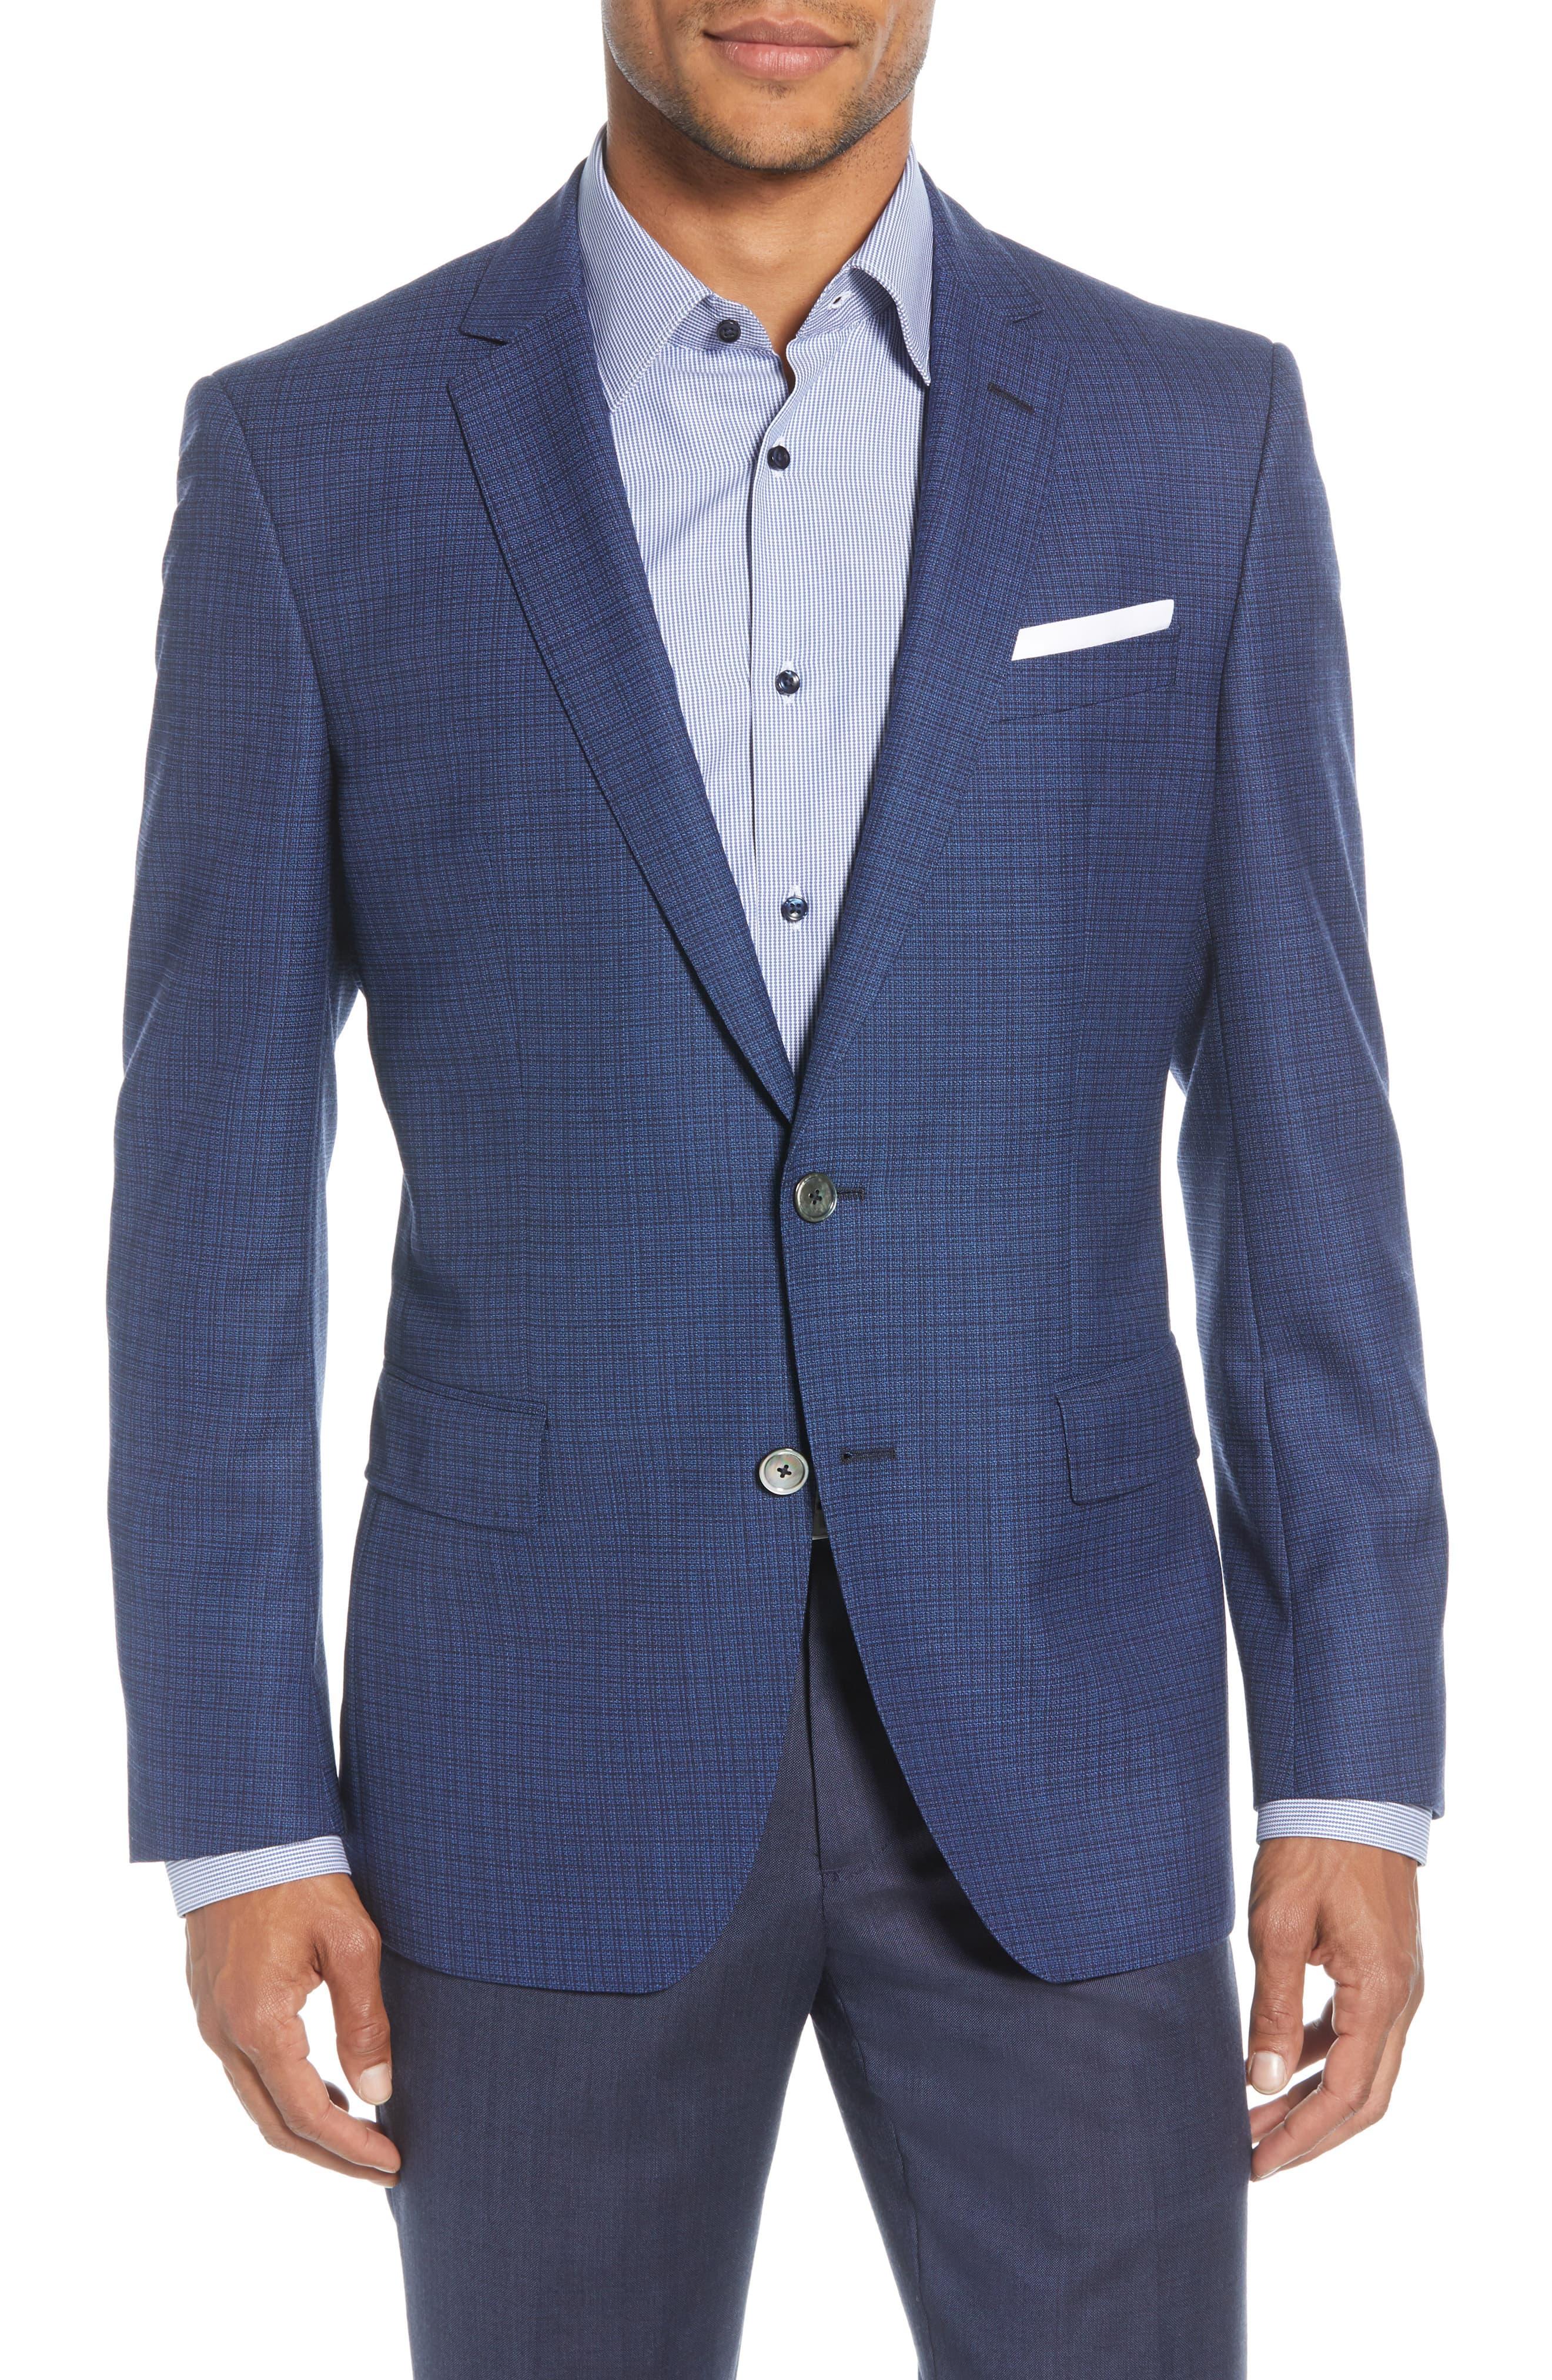 BOSS Hutsons Trim Fit Check Wool Sport Coat in Blue for Men - Lyst